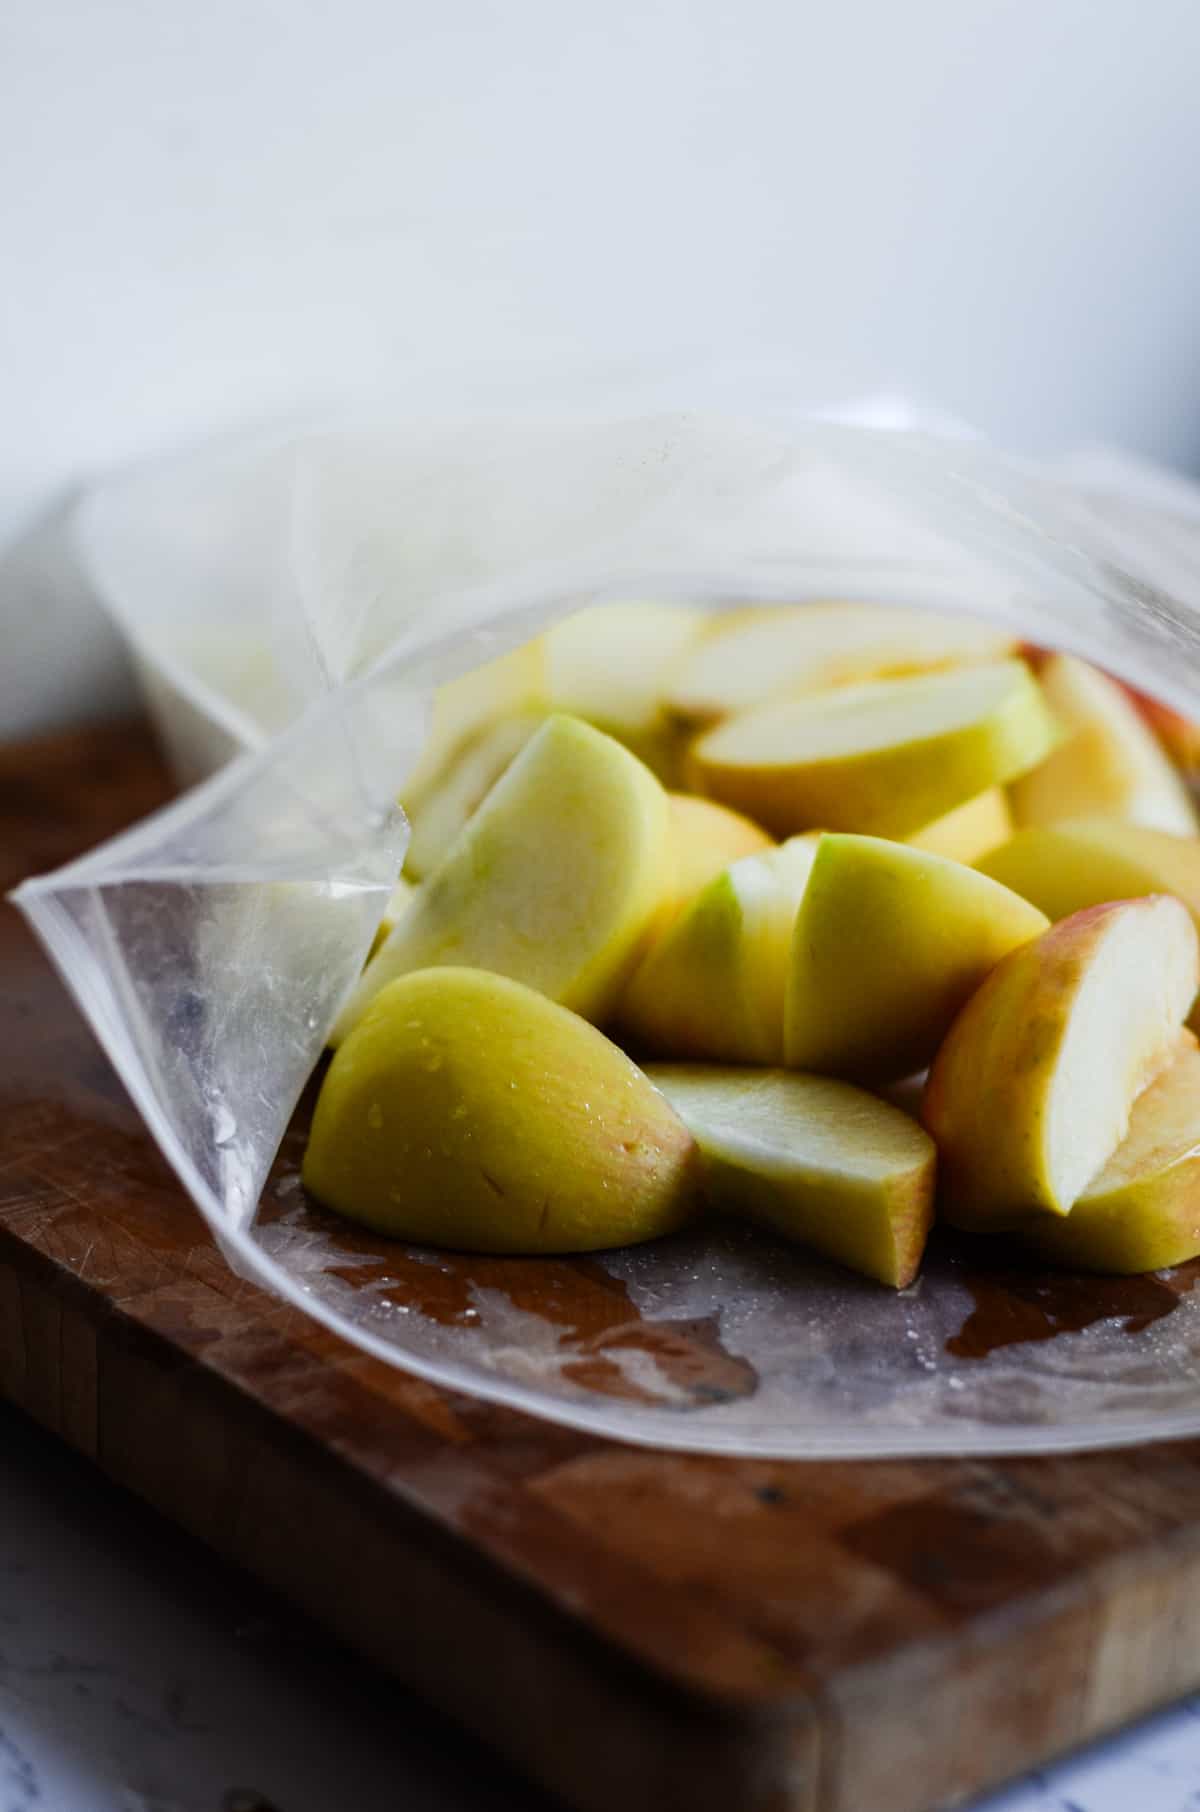 Fresh apples cut up in a freezer bag.